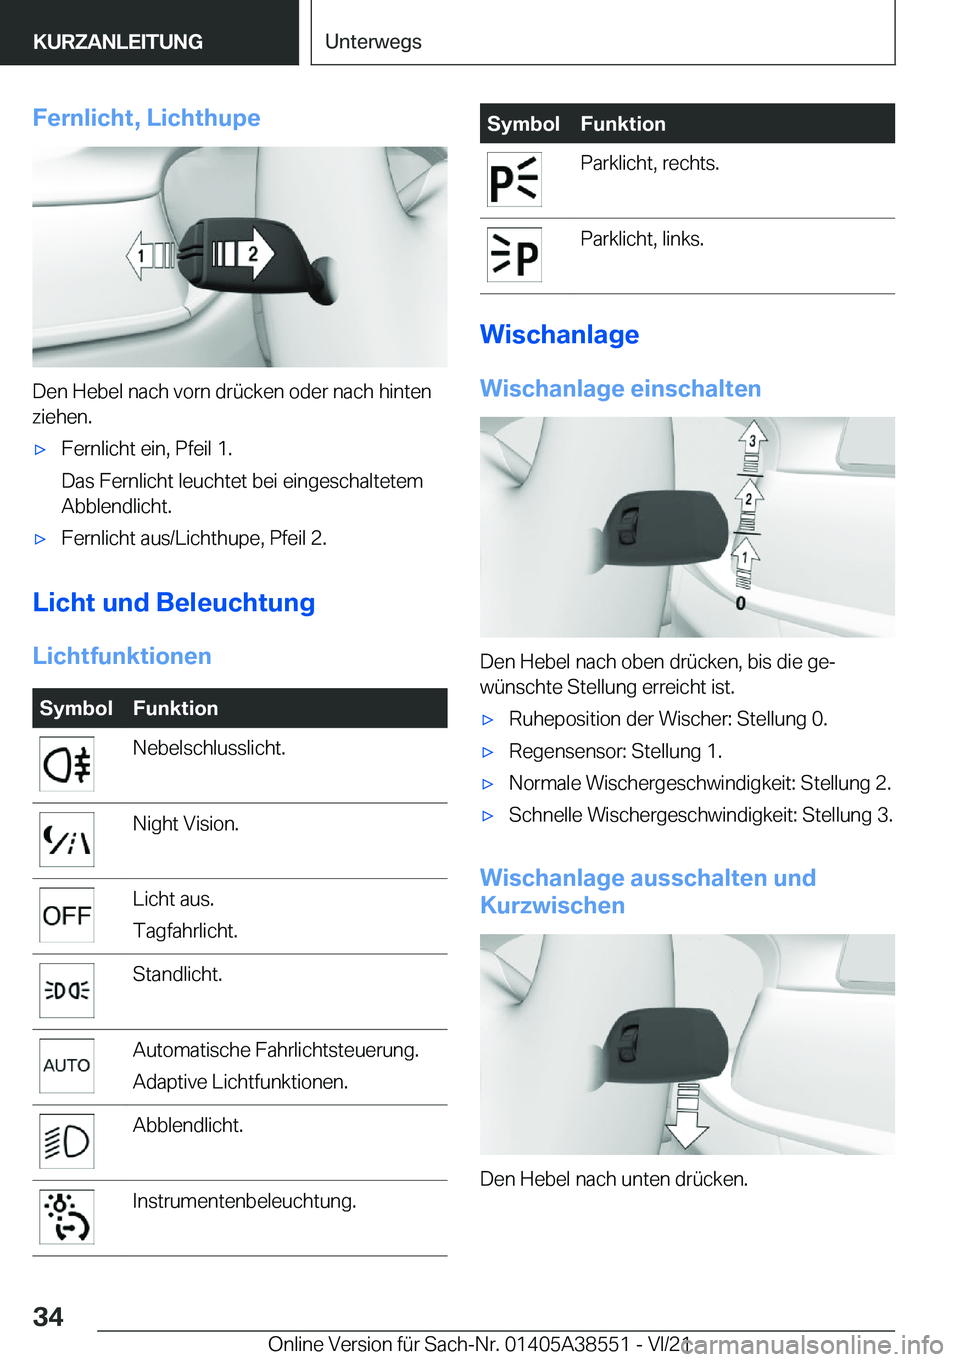 BMW X6 2022  Betriebsanleitungen (in German) �F�e�r�n�l�i�c�h�t�,��L�i�c�h�t�h�u�p�e
�D�e�n��H�e�b�e�l��n�a�c�h��v�o�r�n��d�r�